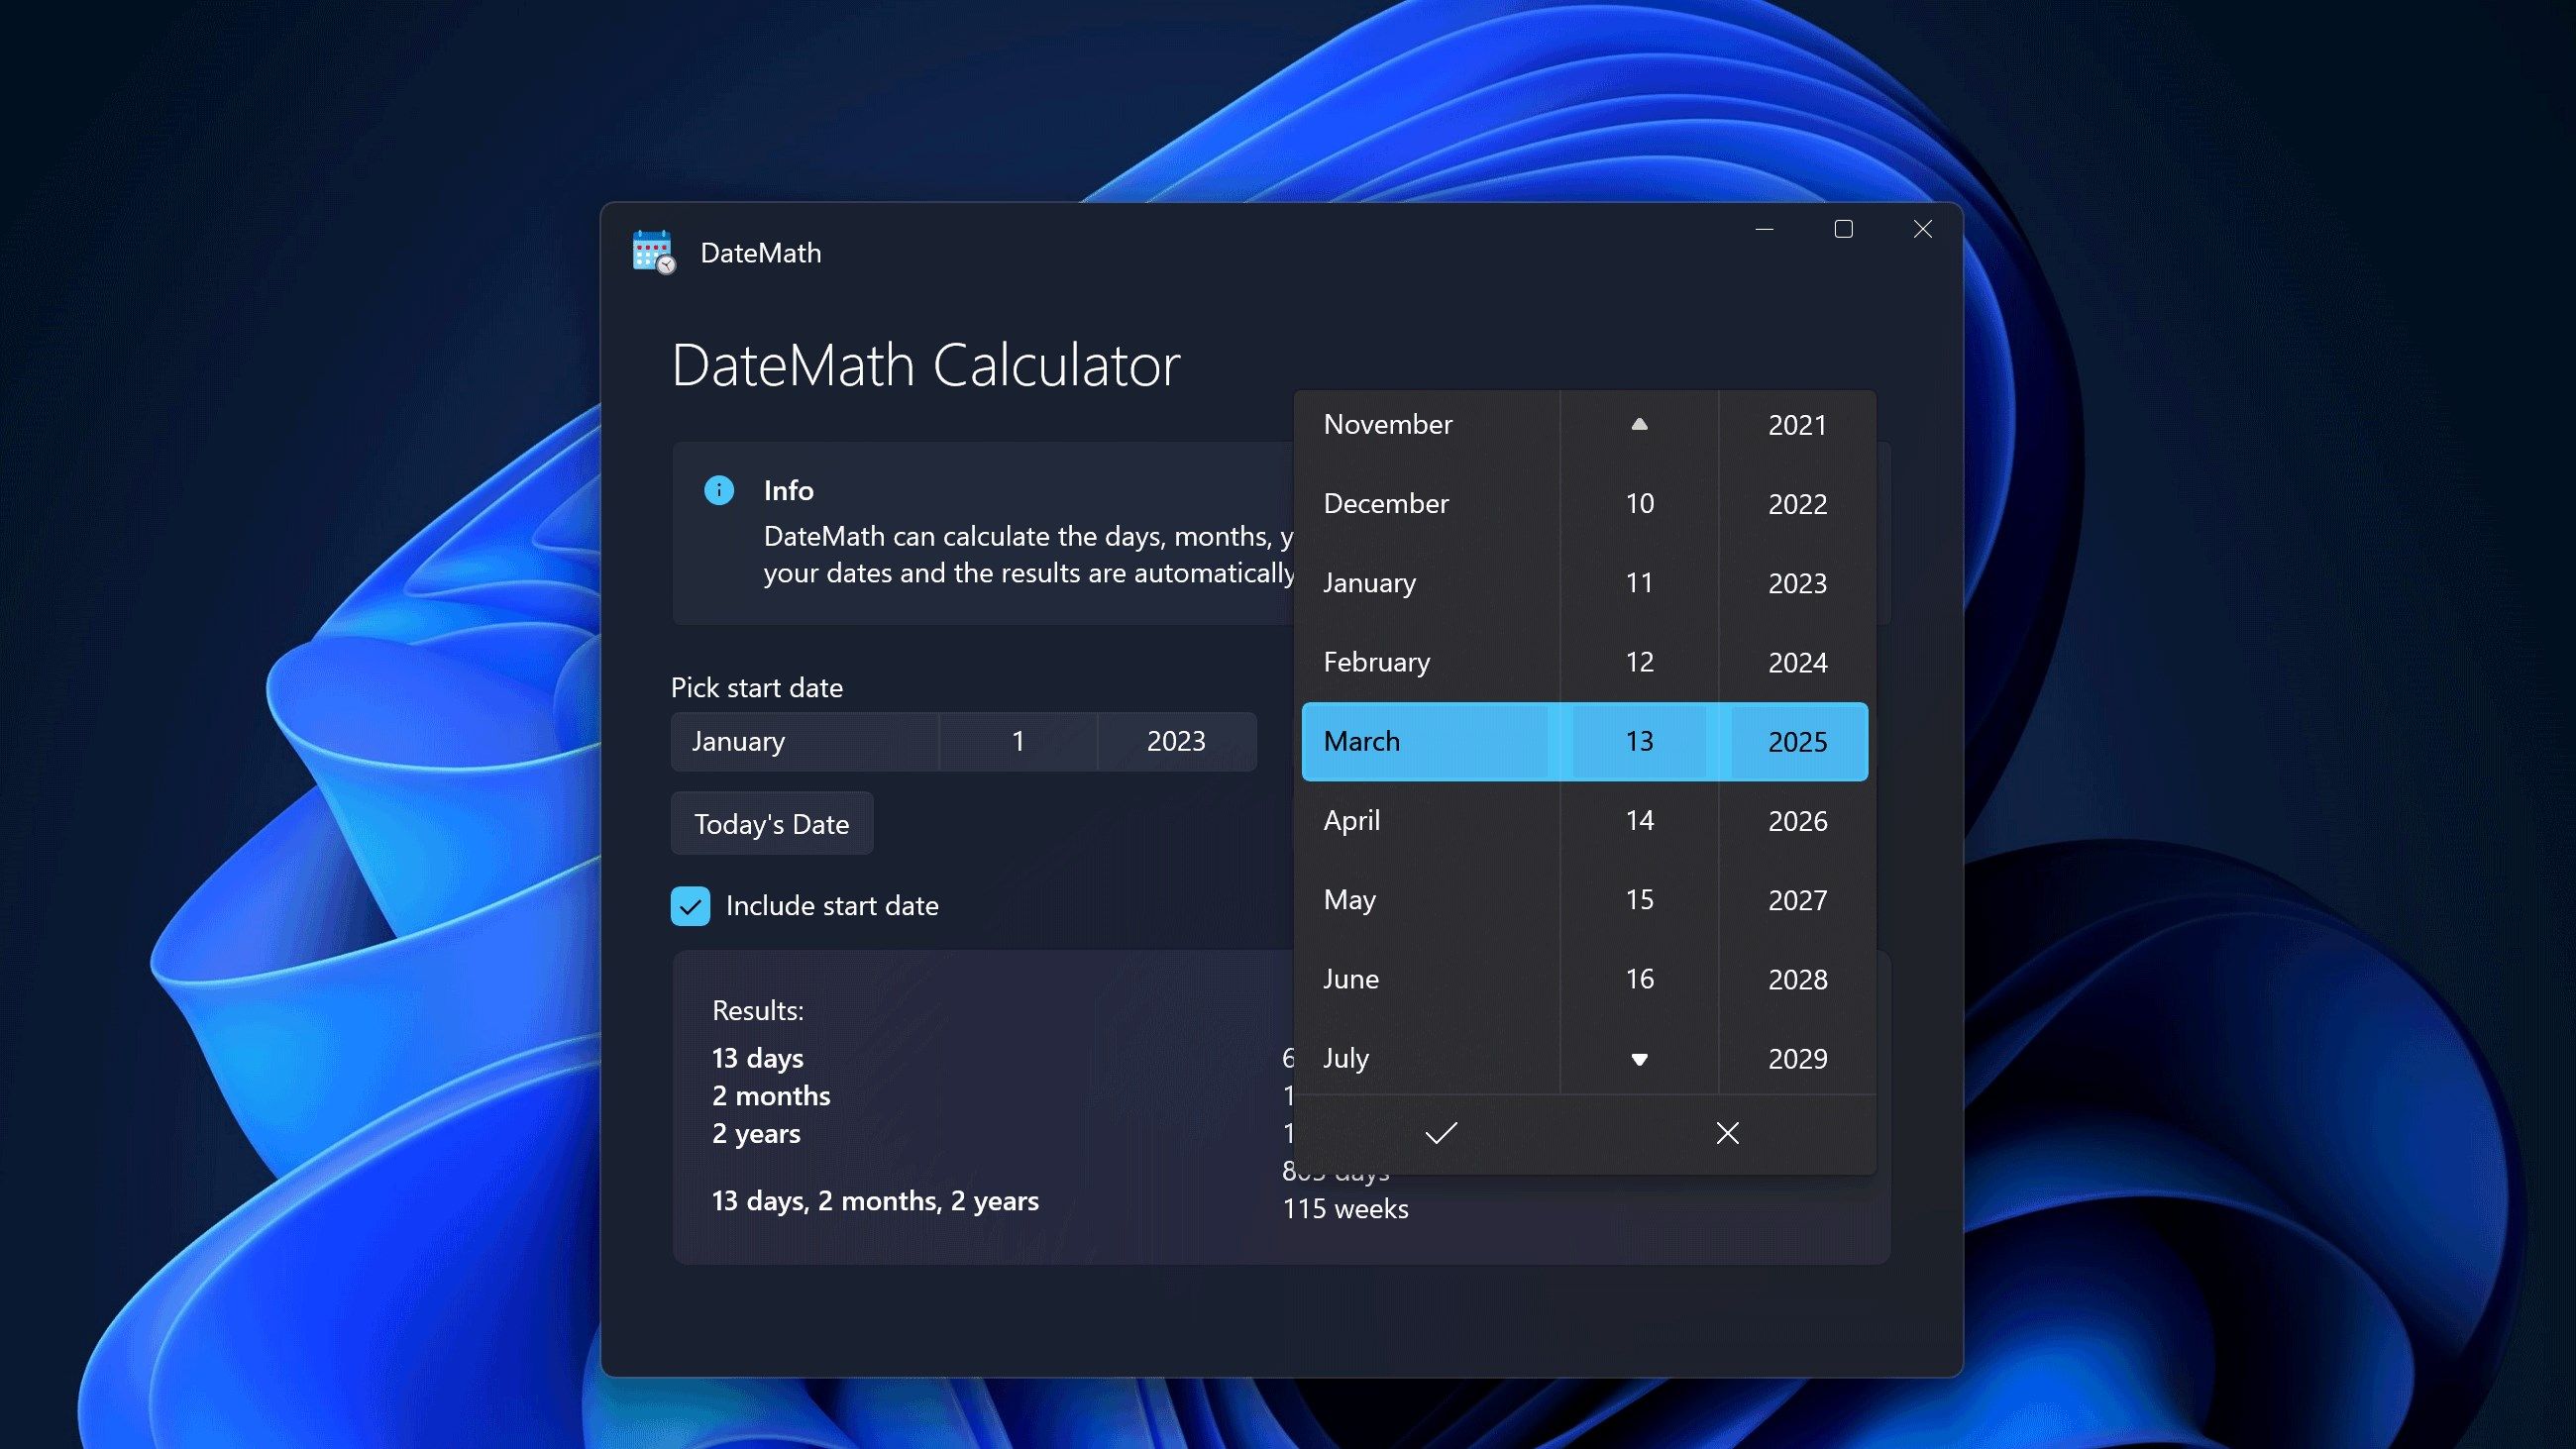 DateMath - Calculate Between Dates